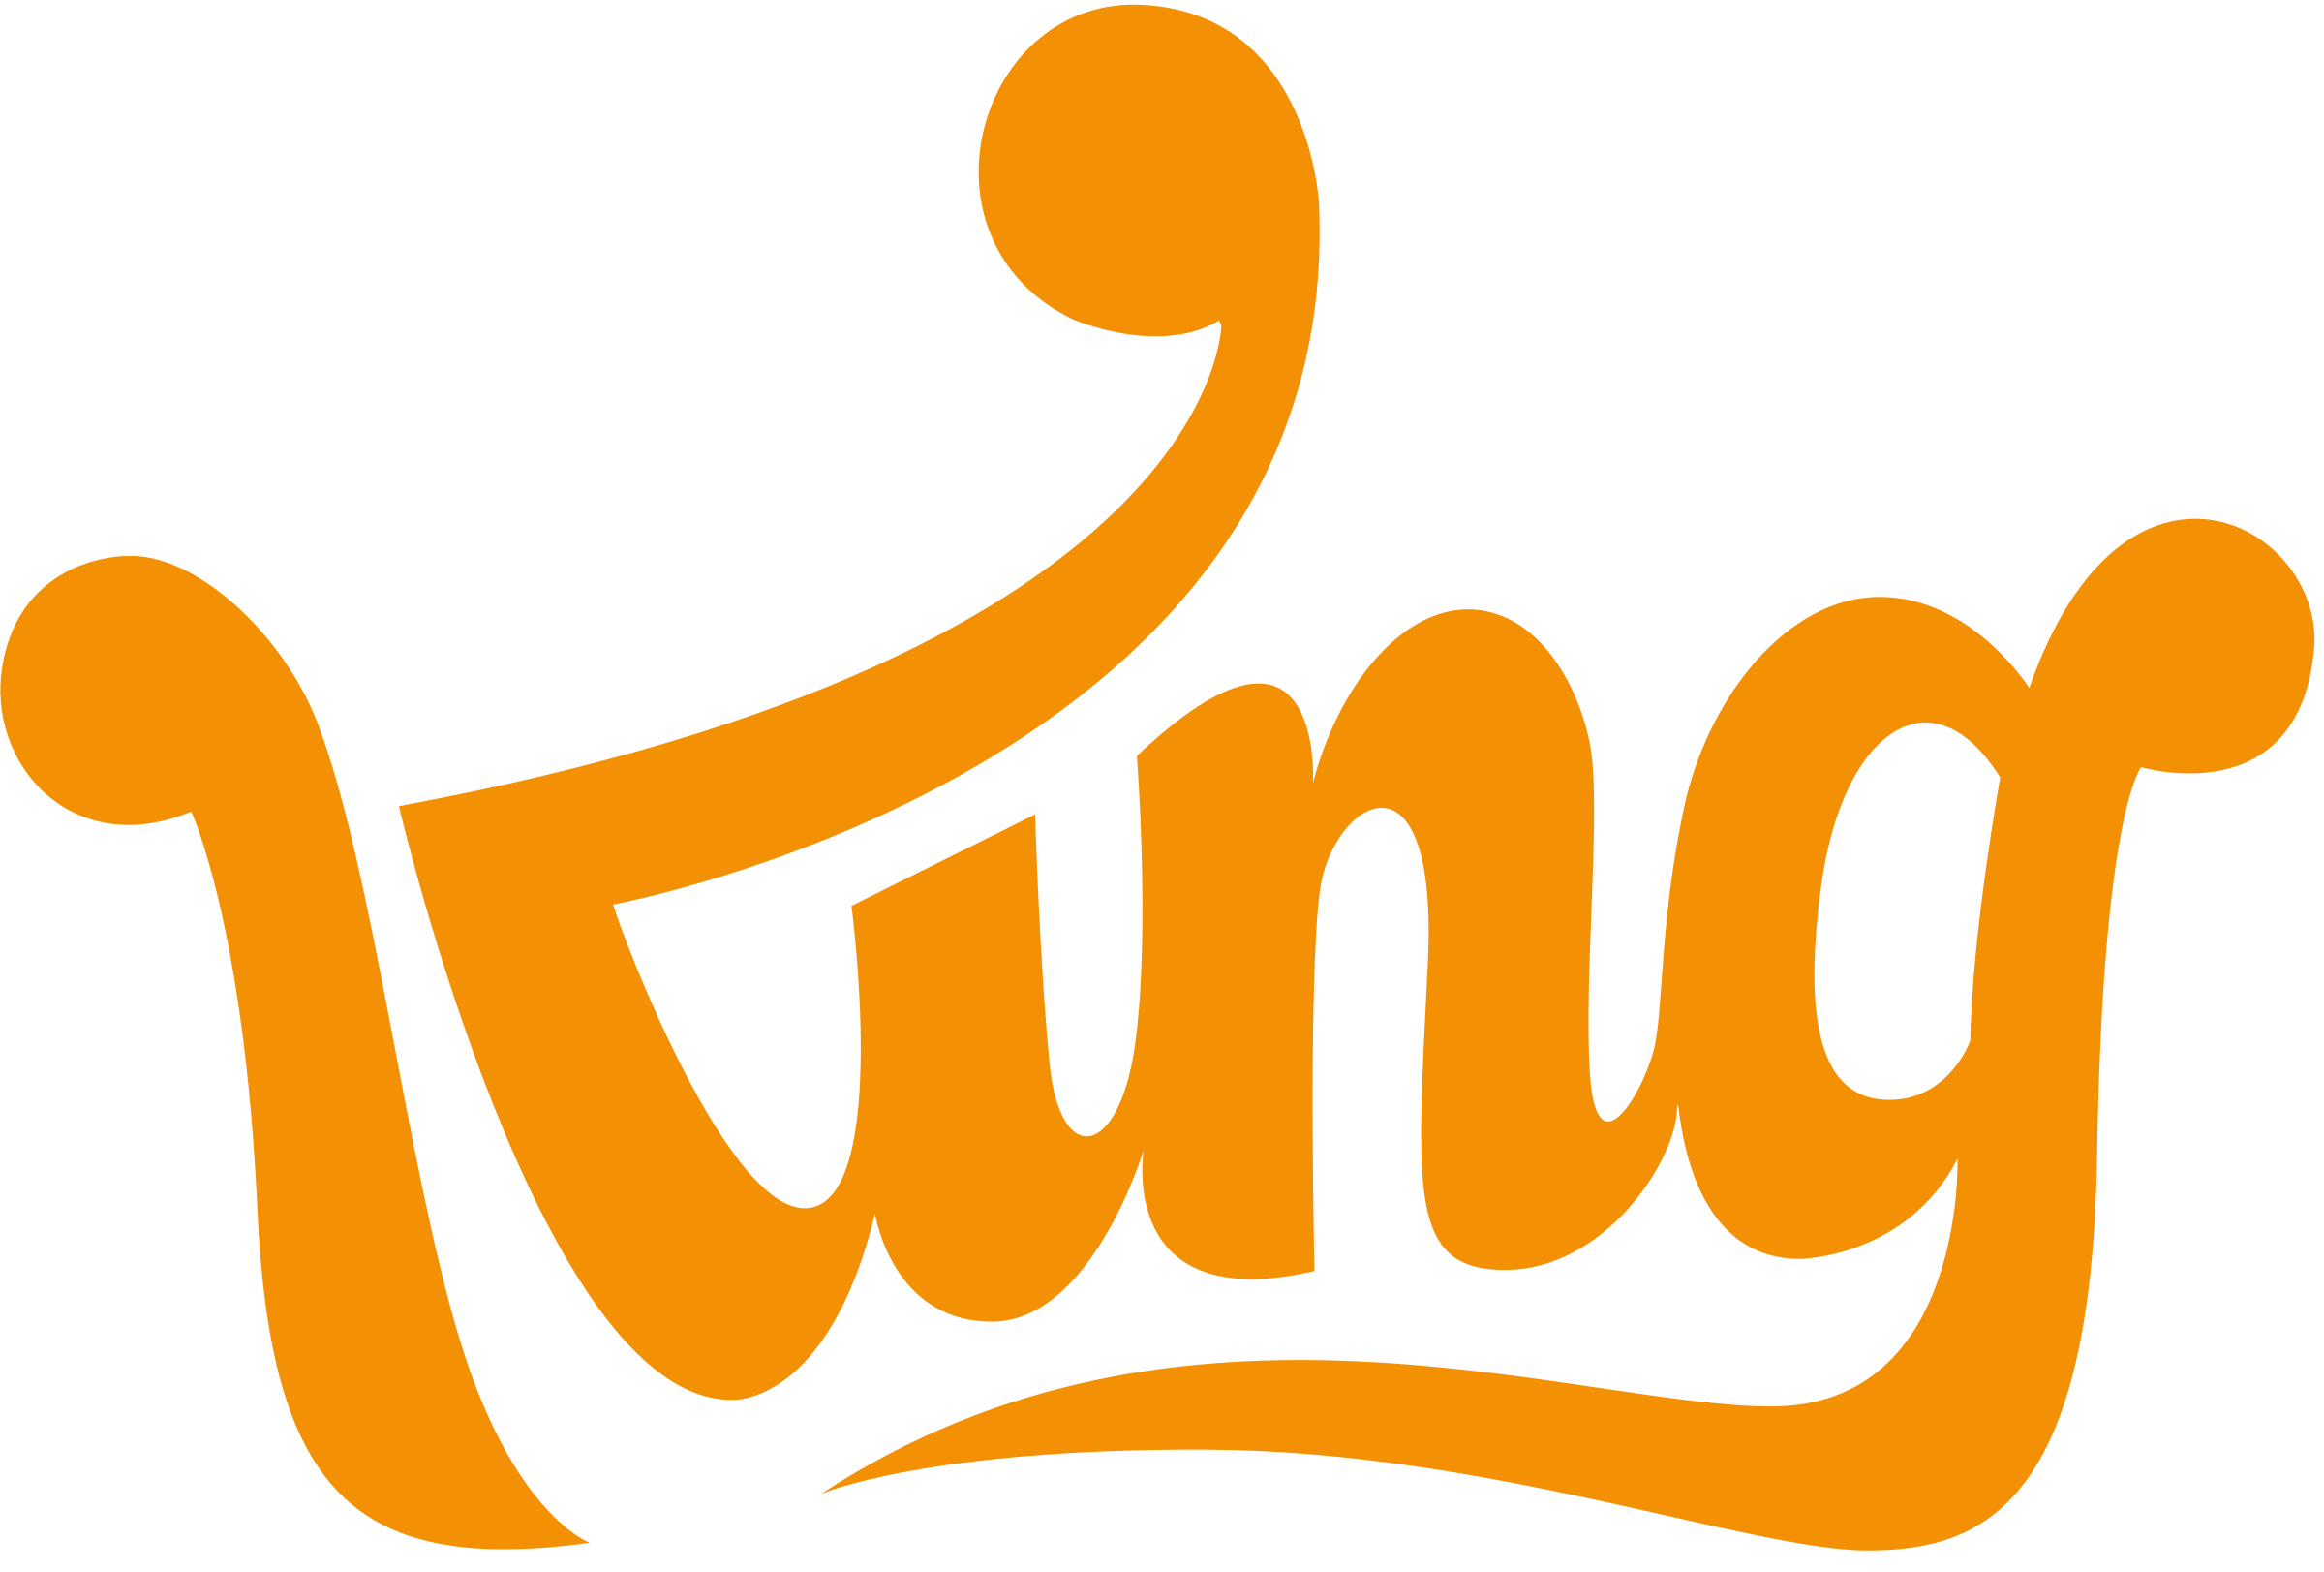 King Logo - King Logo PNG Transparent & SVG Vector - Freebie Supply